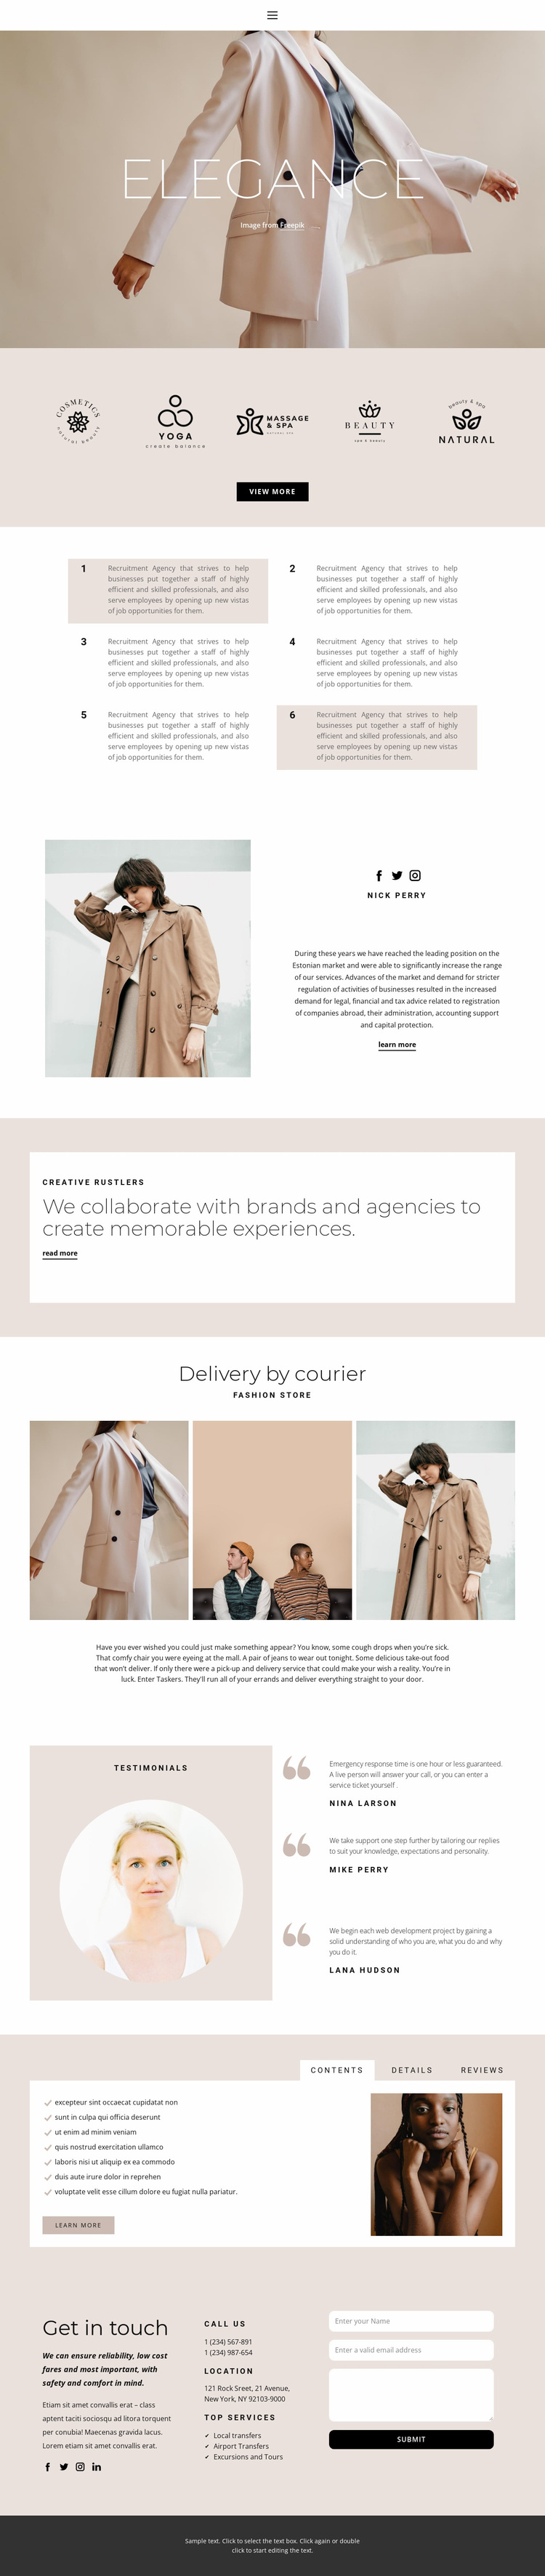 Elegance in fashion Website Design